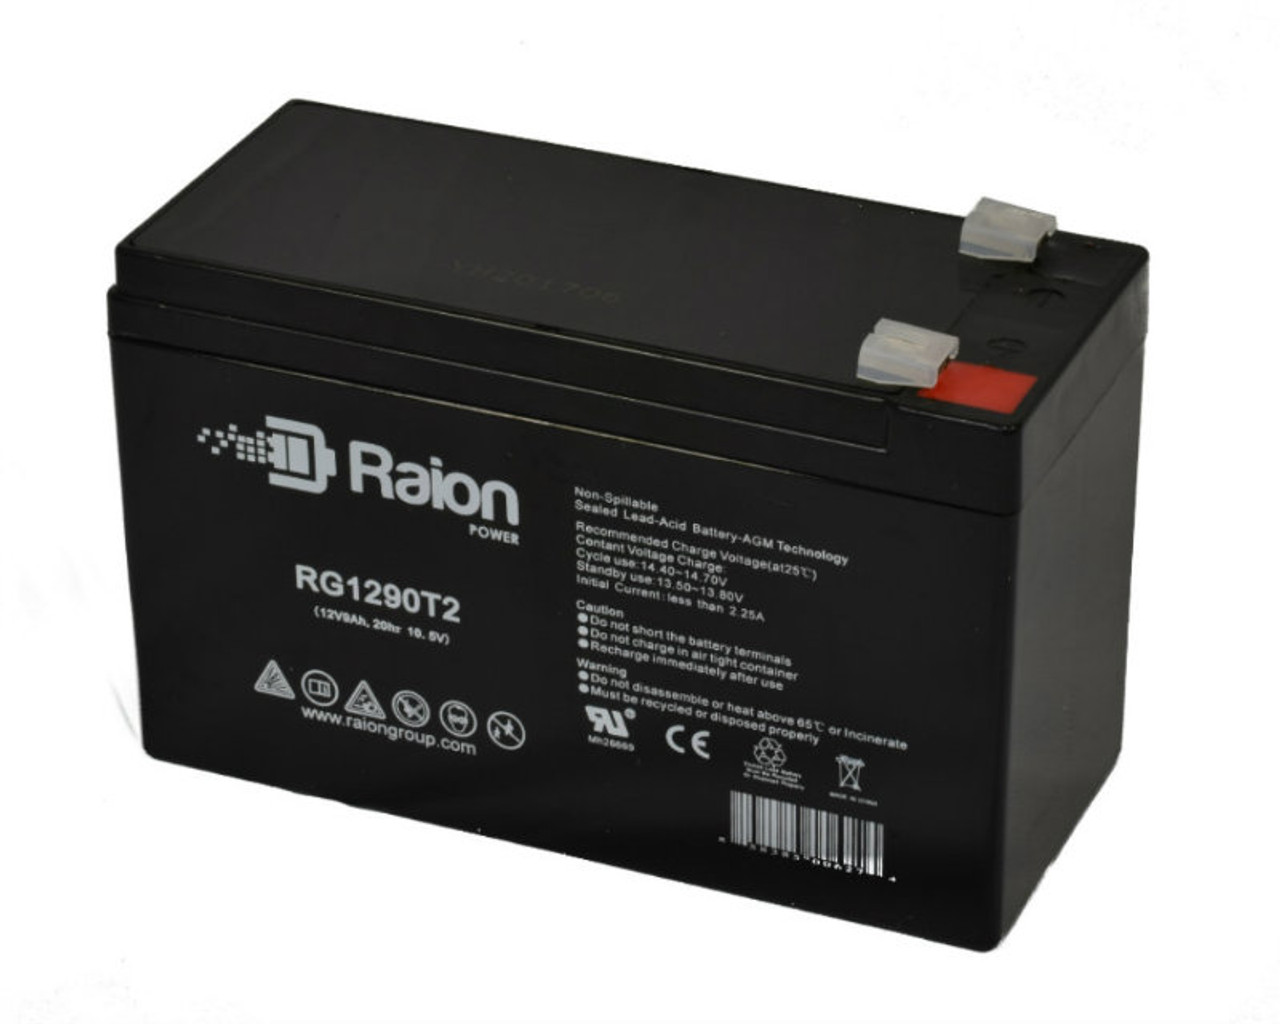 Raion Power RG1290T2 12V 9Ah AGM Battery for National Battery C09A